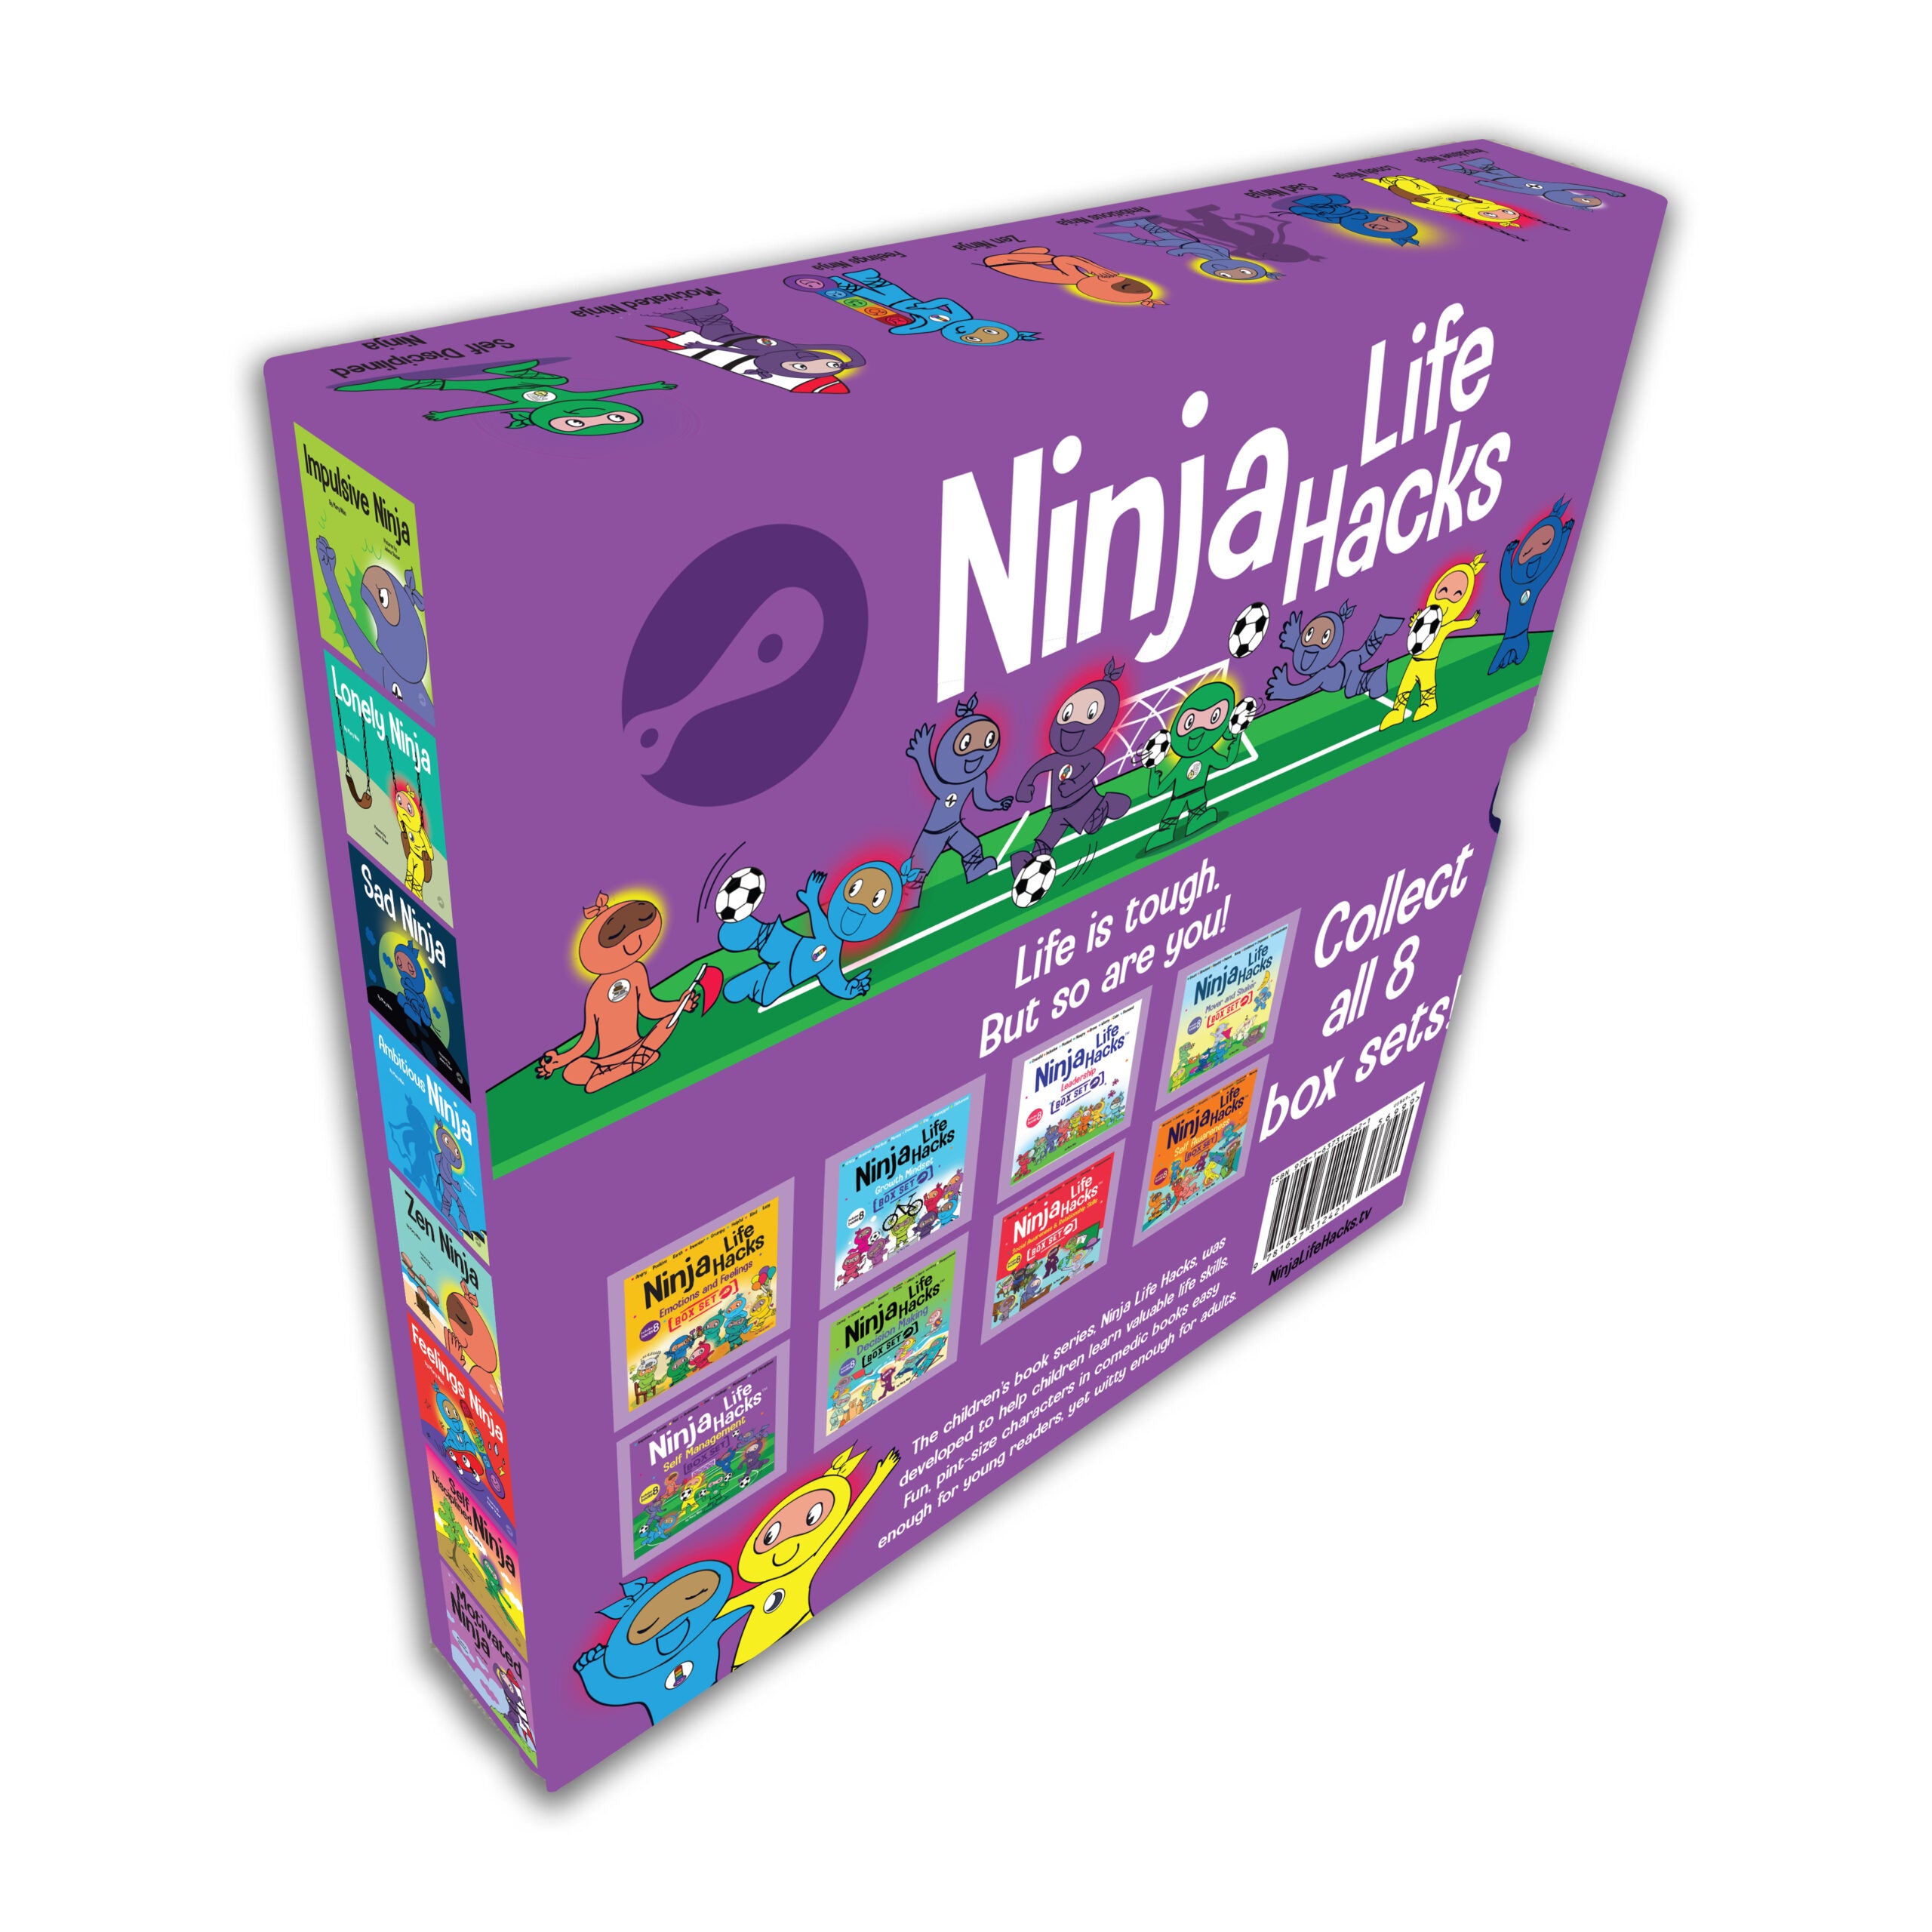 Ninja Life Hacks Growth Mindset 8 Book Box Set (Books 9-16) – Ninja Life  Hacks - Growth Mindset